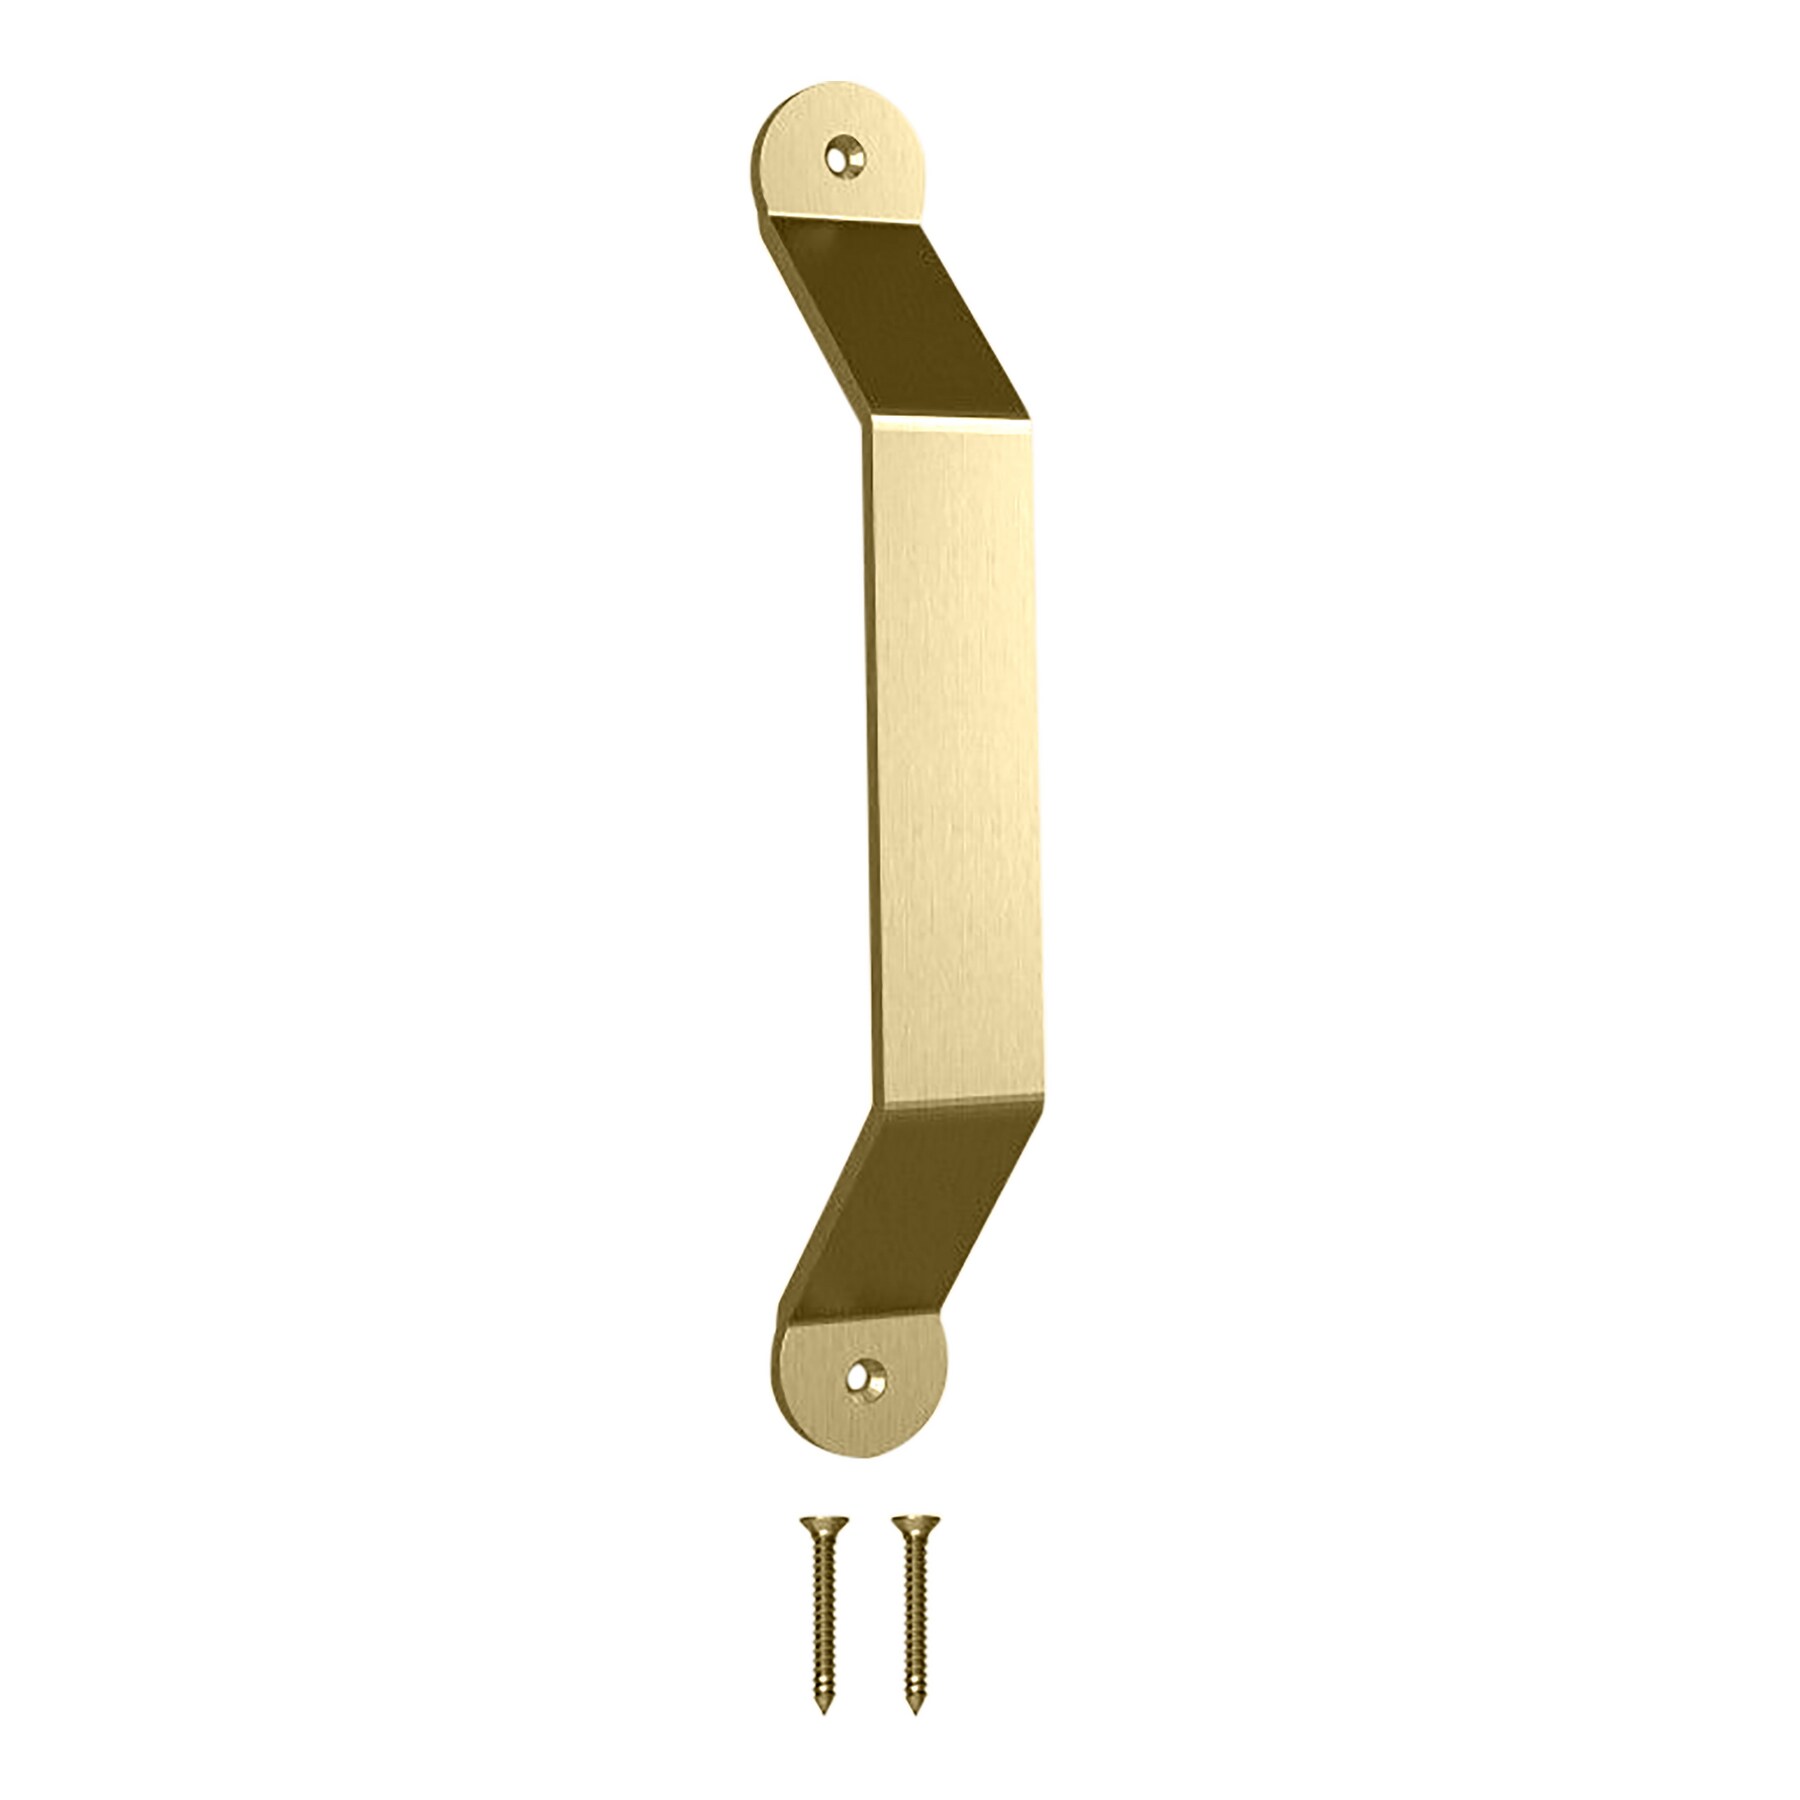 National Hardware 2.75-in Satin Brass Pocket Door Pull